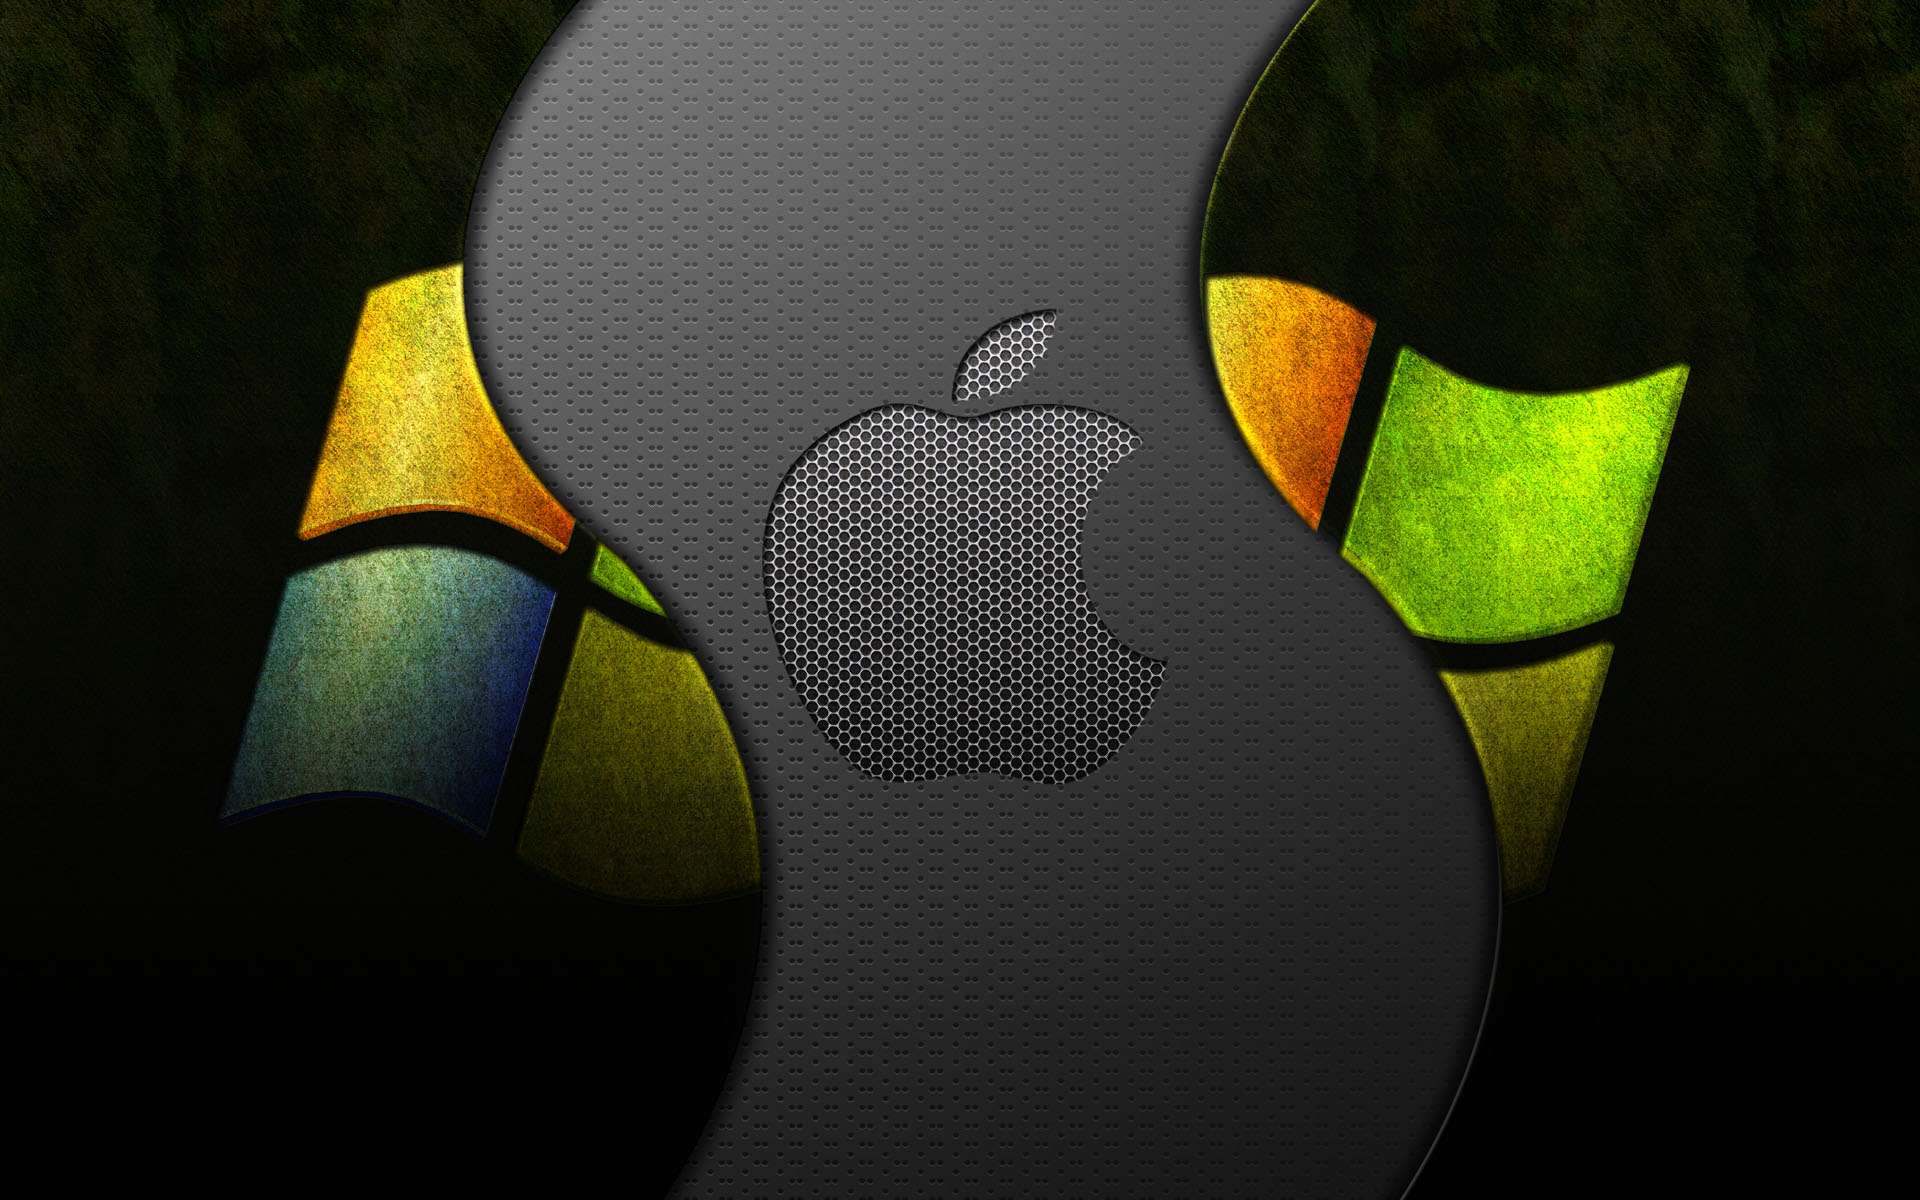 DesktopSnowOK 6.24 for apple download